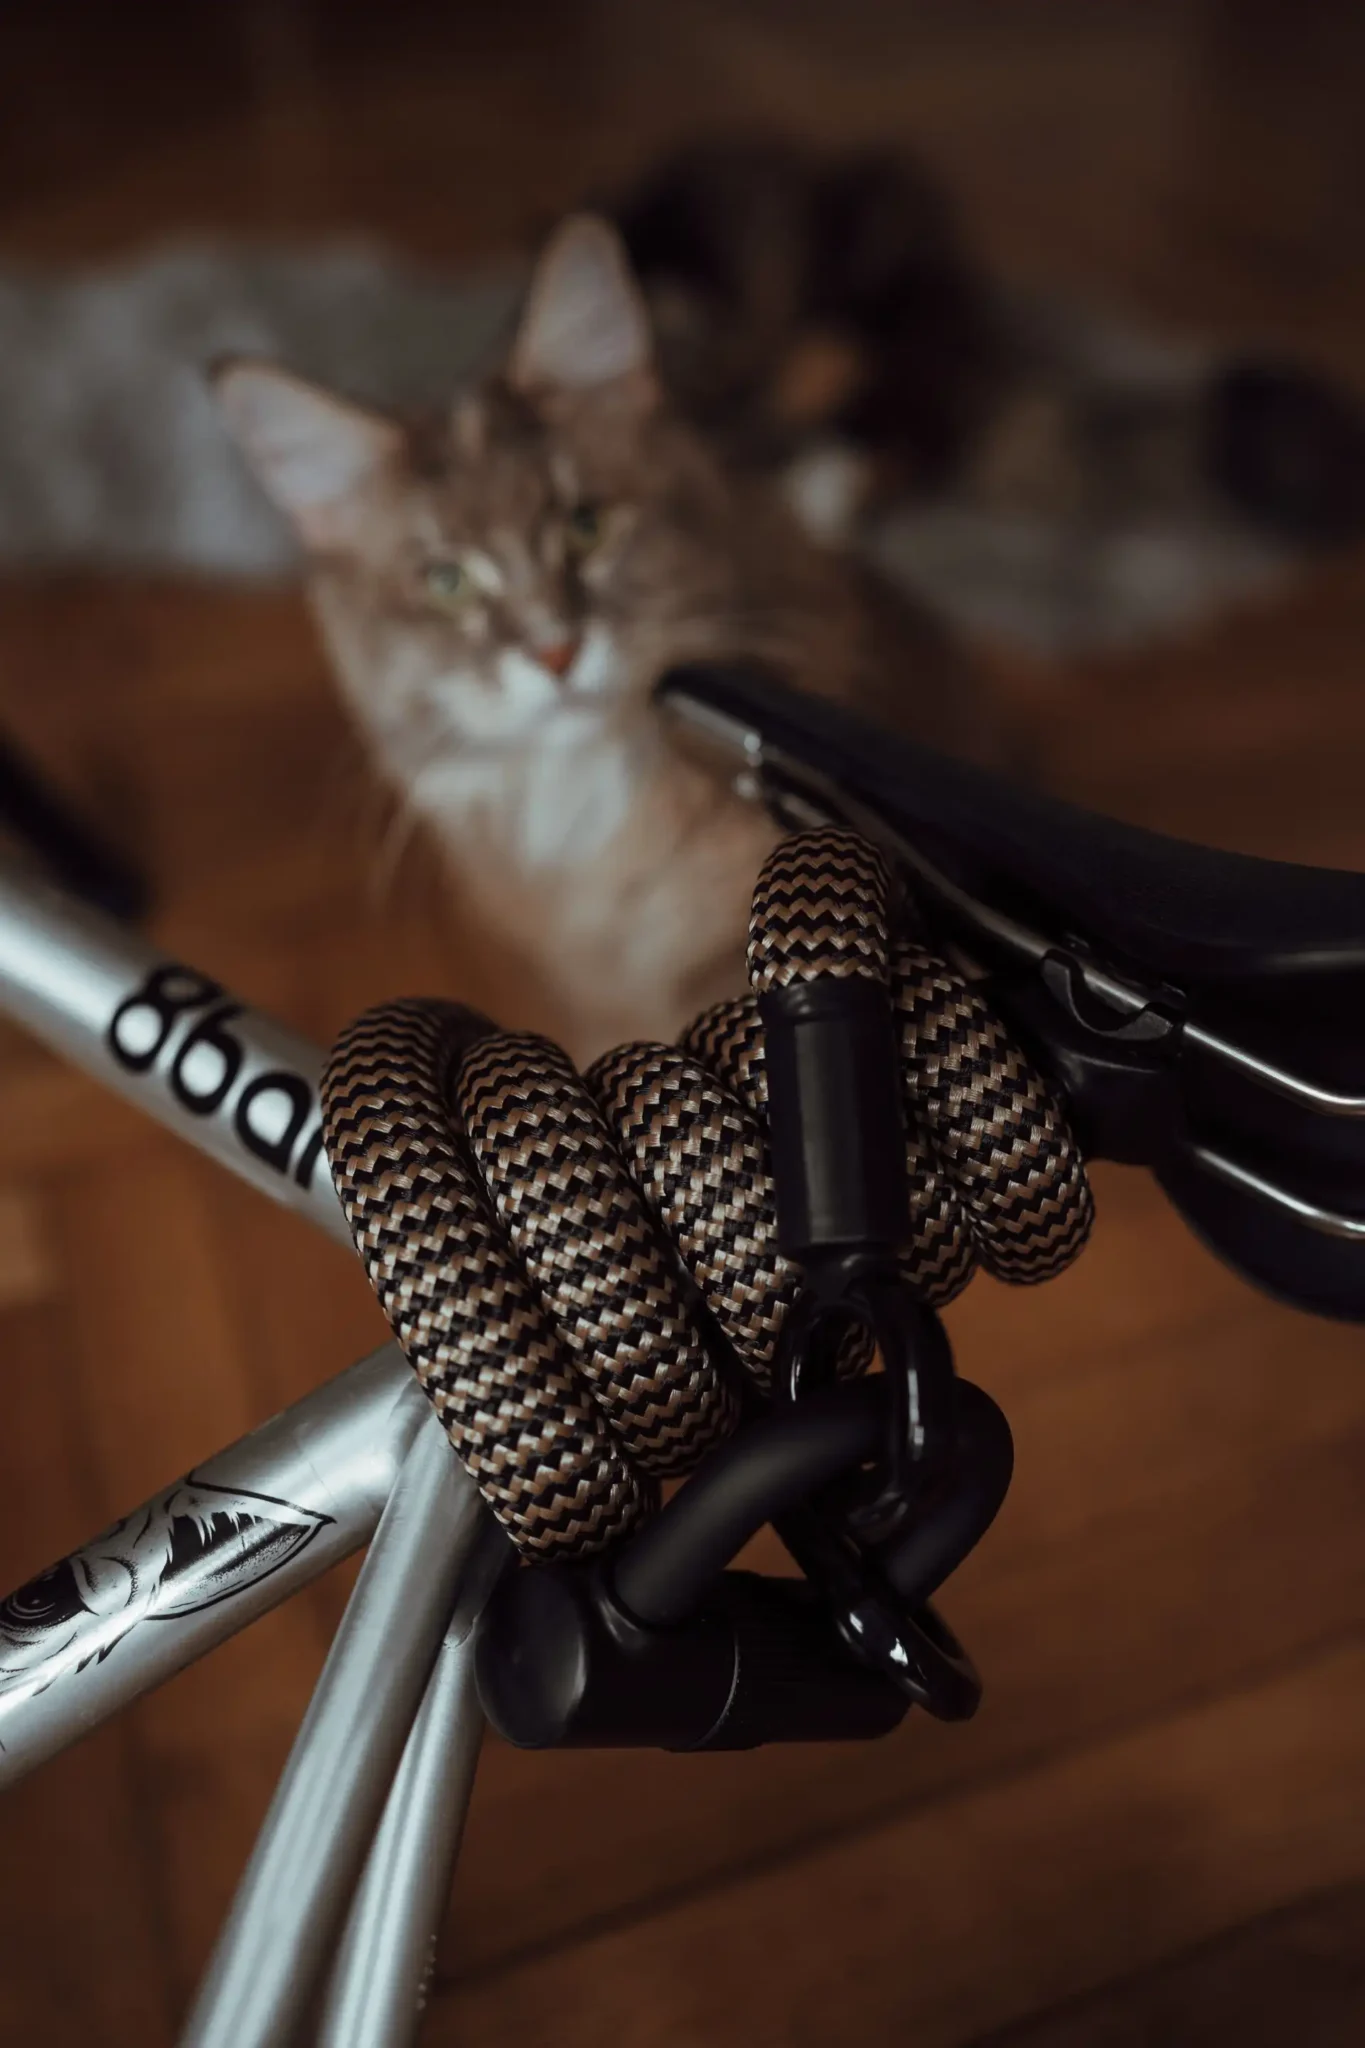 tex–lock wild hemp wrapped around saddle rail with cat in the background